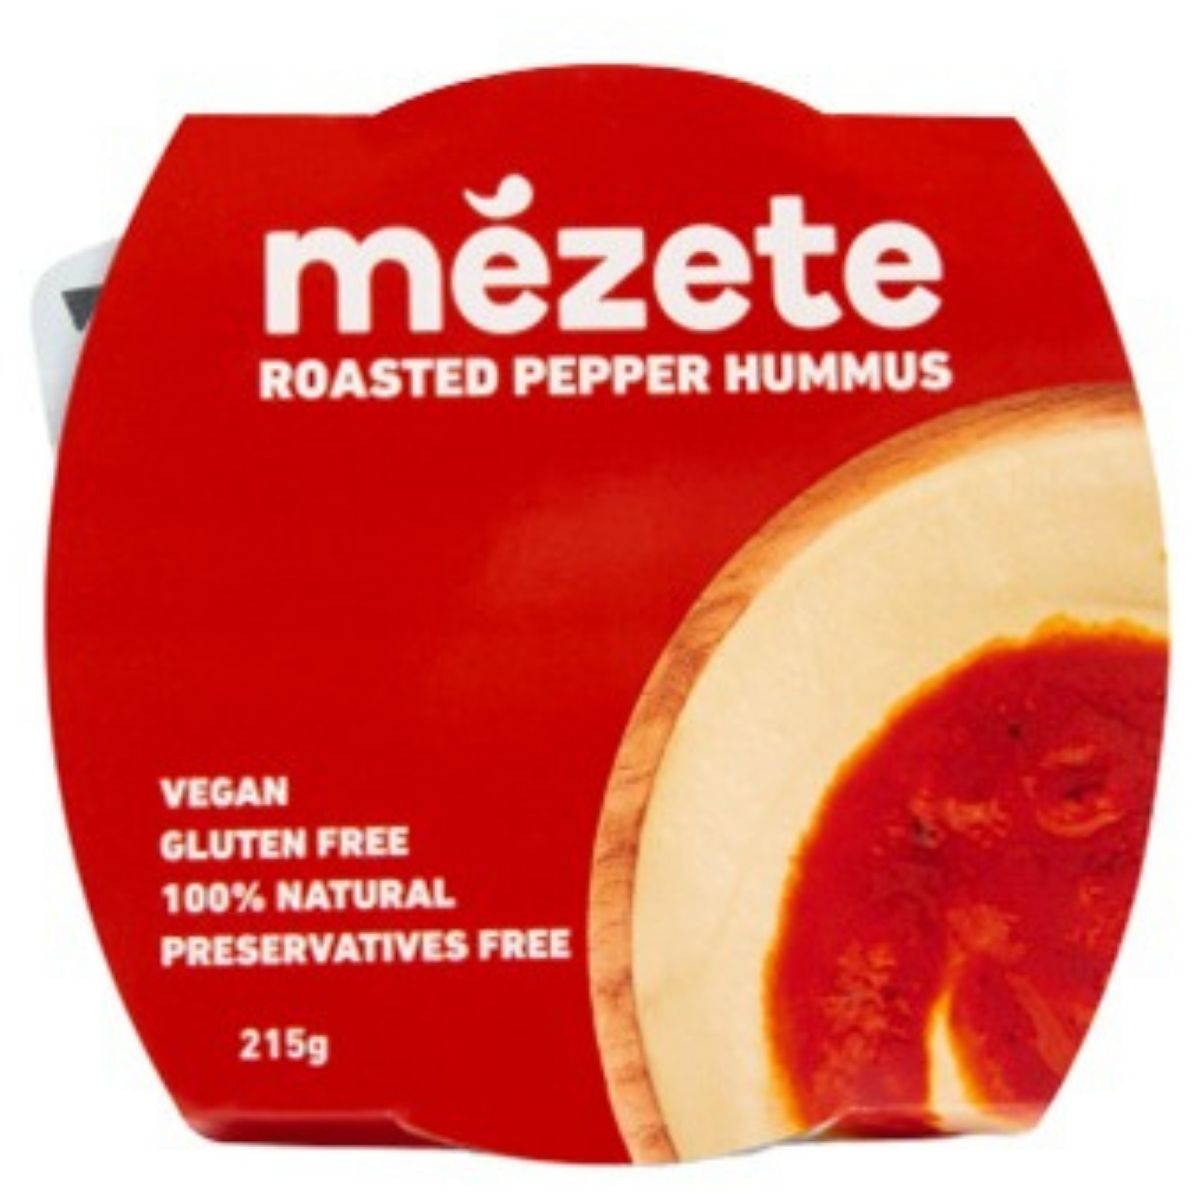 Mezete Hummus Roasted Pepper - 215g - SoulBia